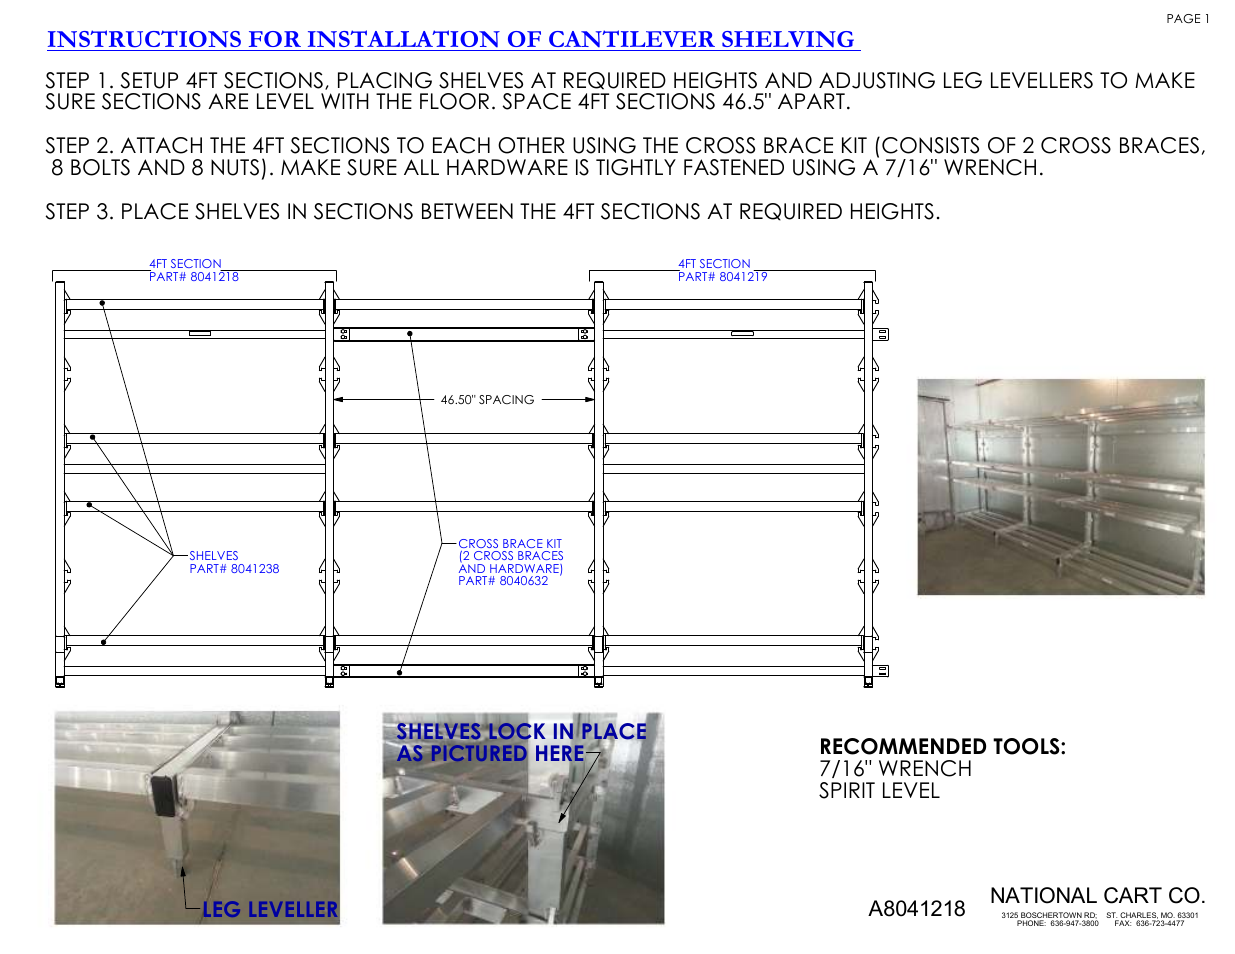 National Cart AL-2460-TUCS ALUMINUM CANTILEVERED SHELVING User Manual | 2 pages